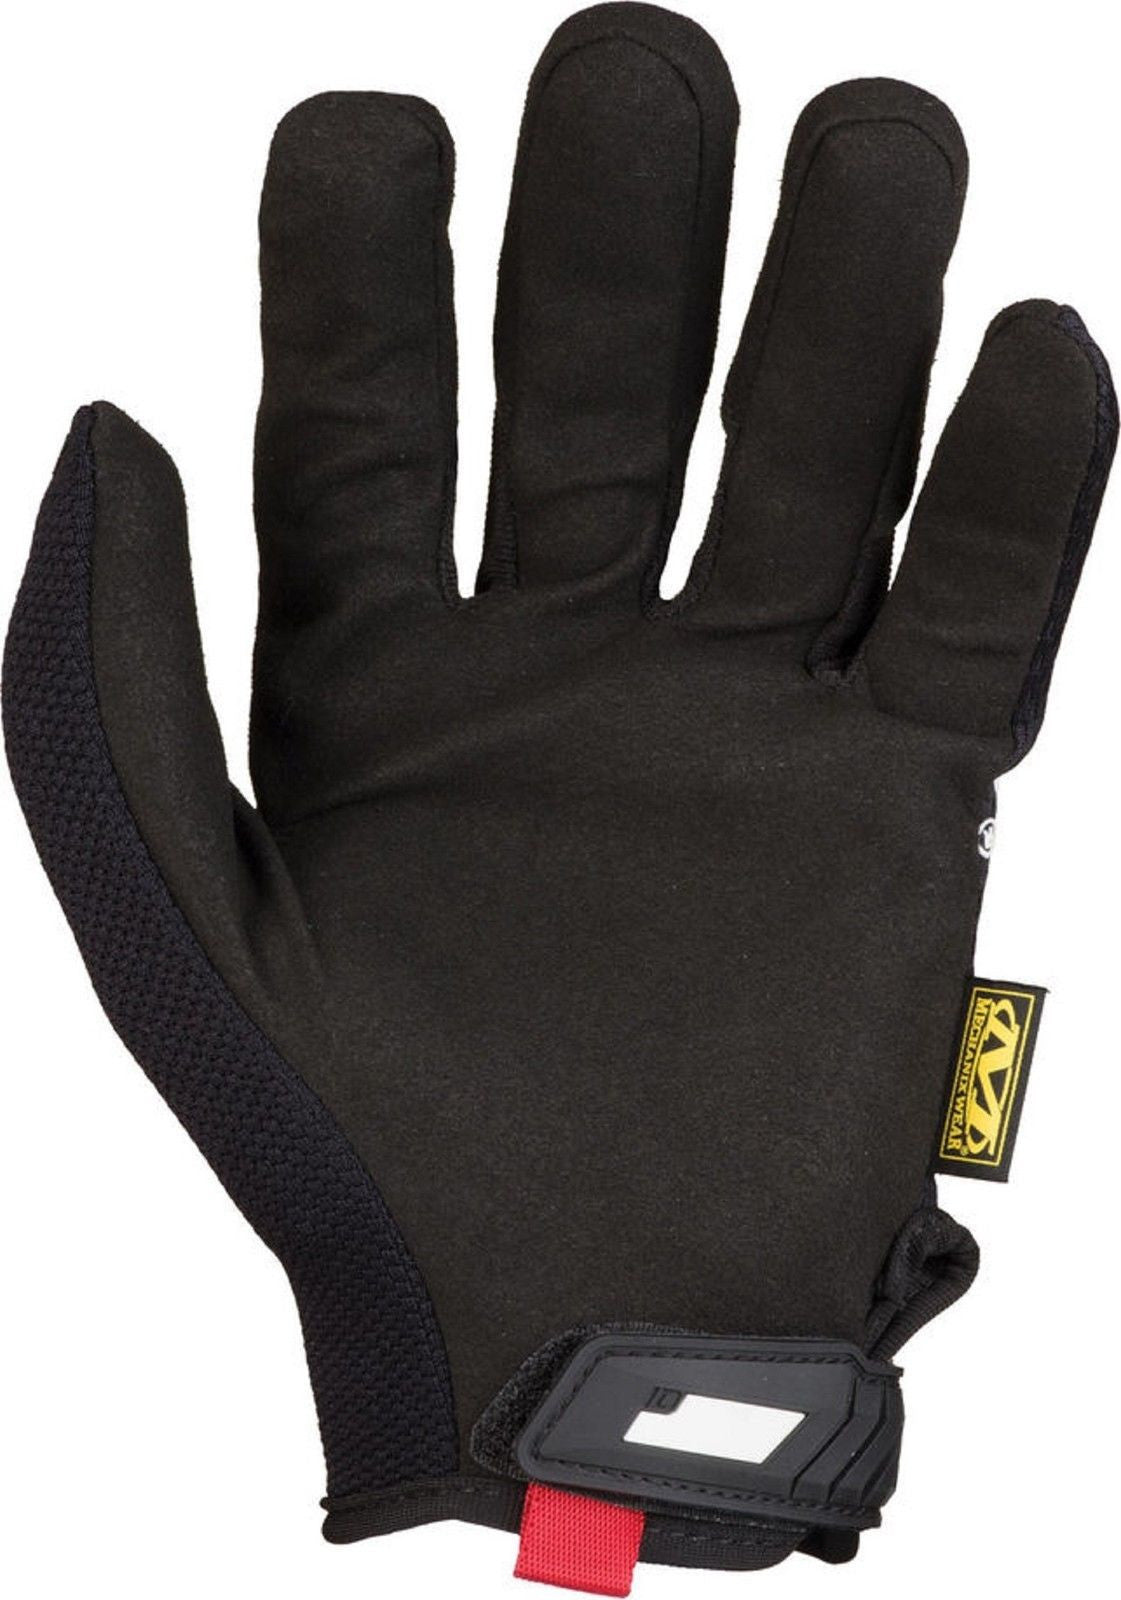 Mechanix Wear The Original Multi-Purpose Glove - Mens Repair & Field Work Gloves